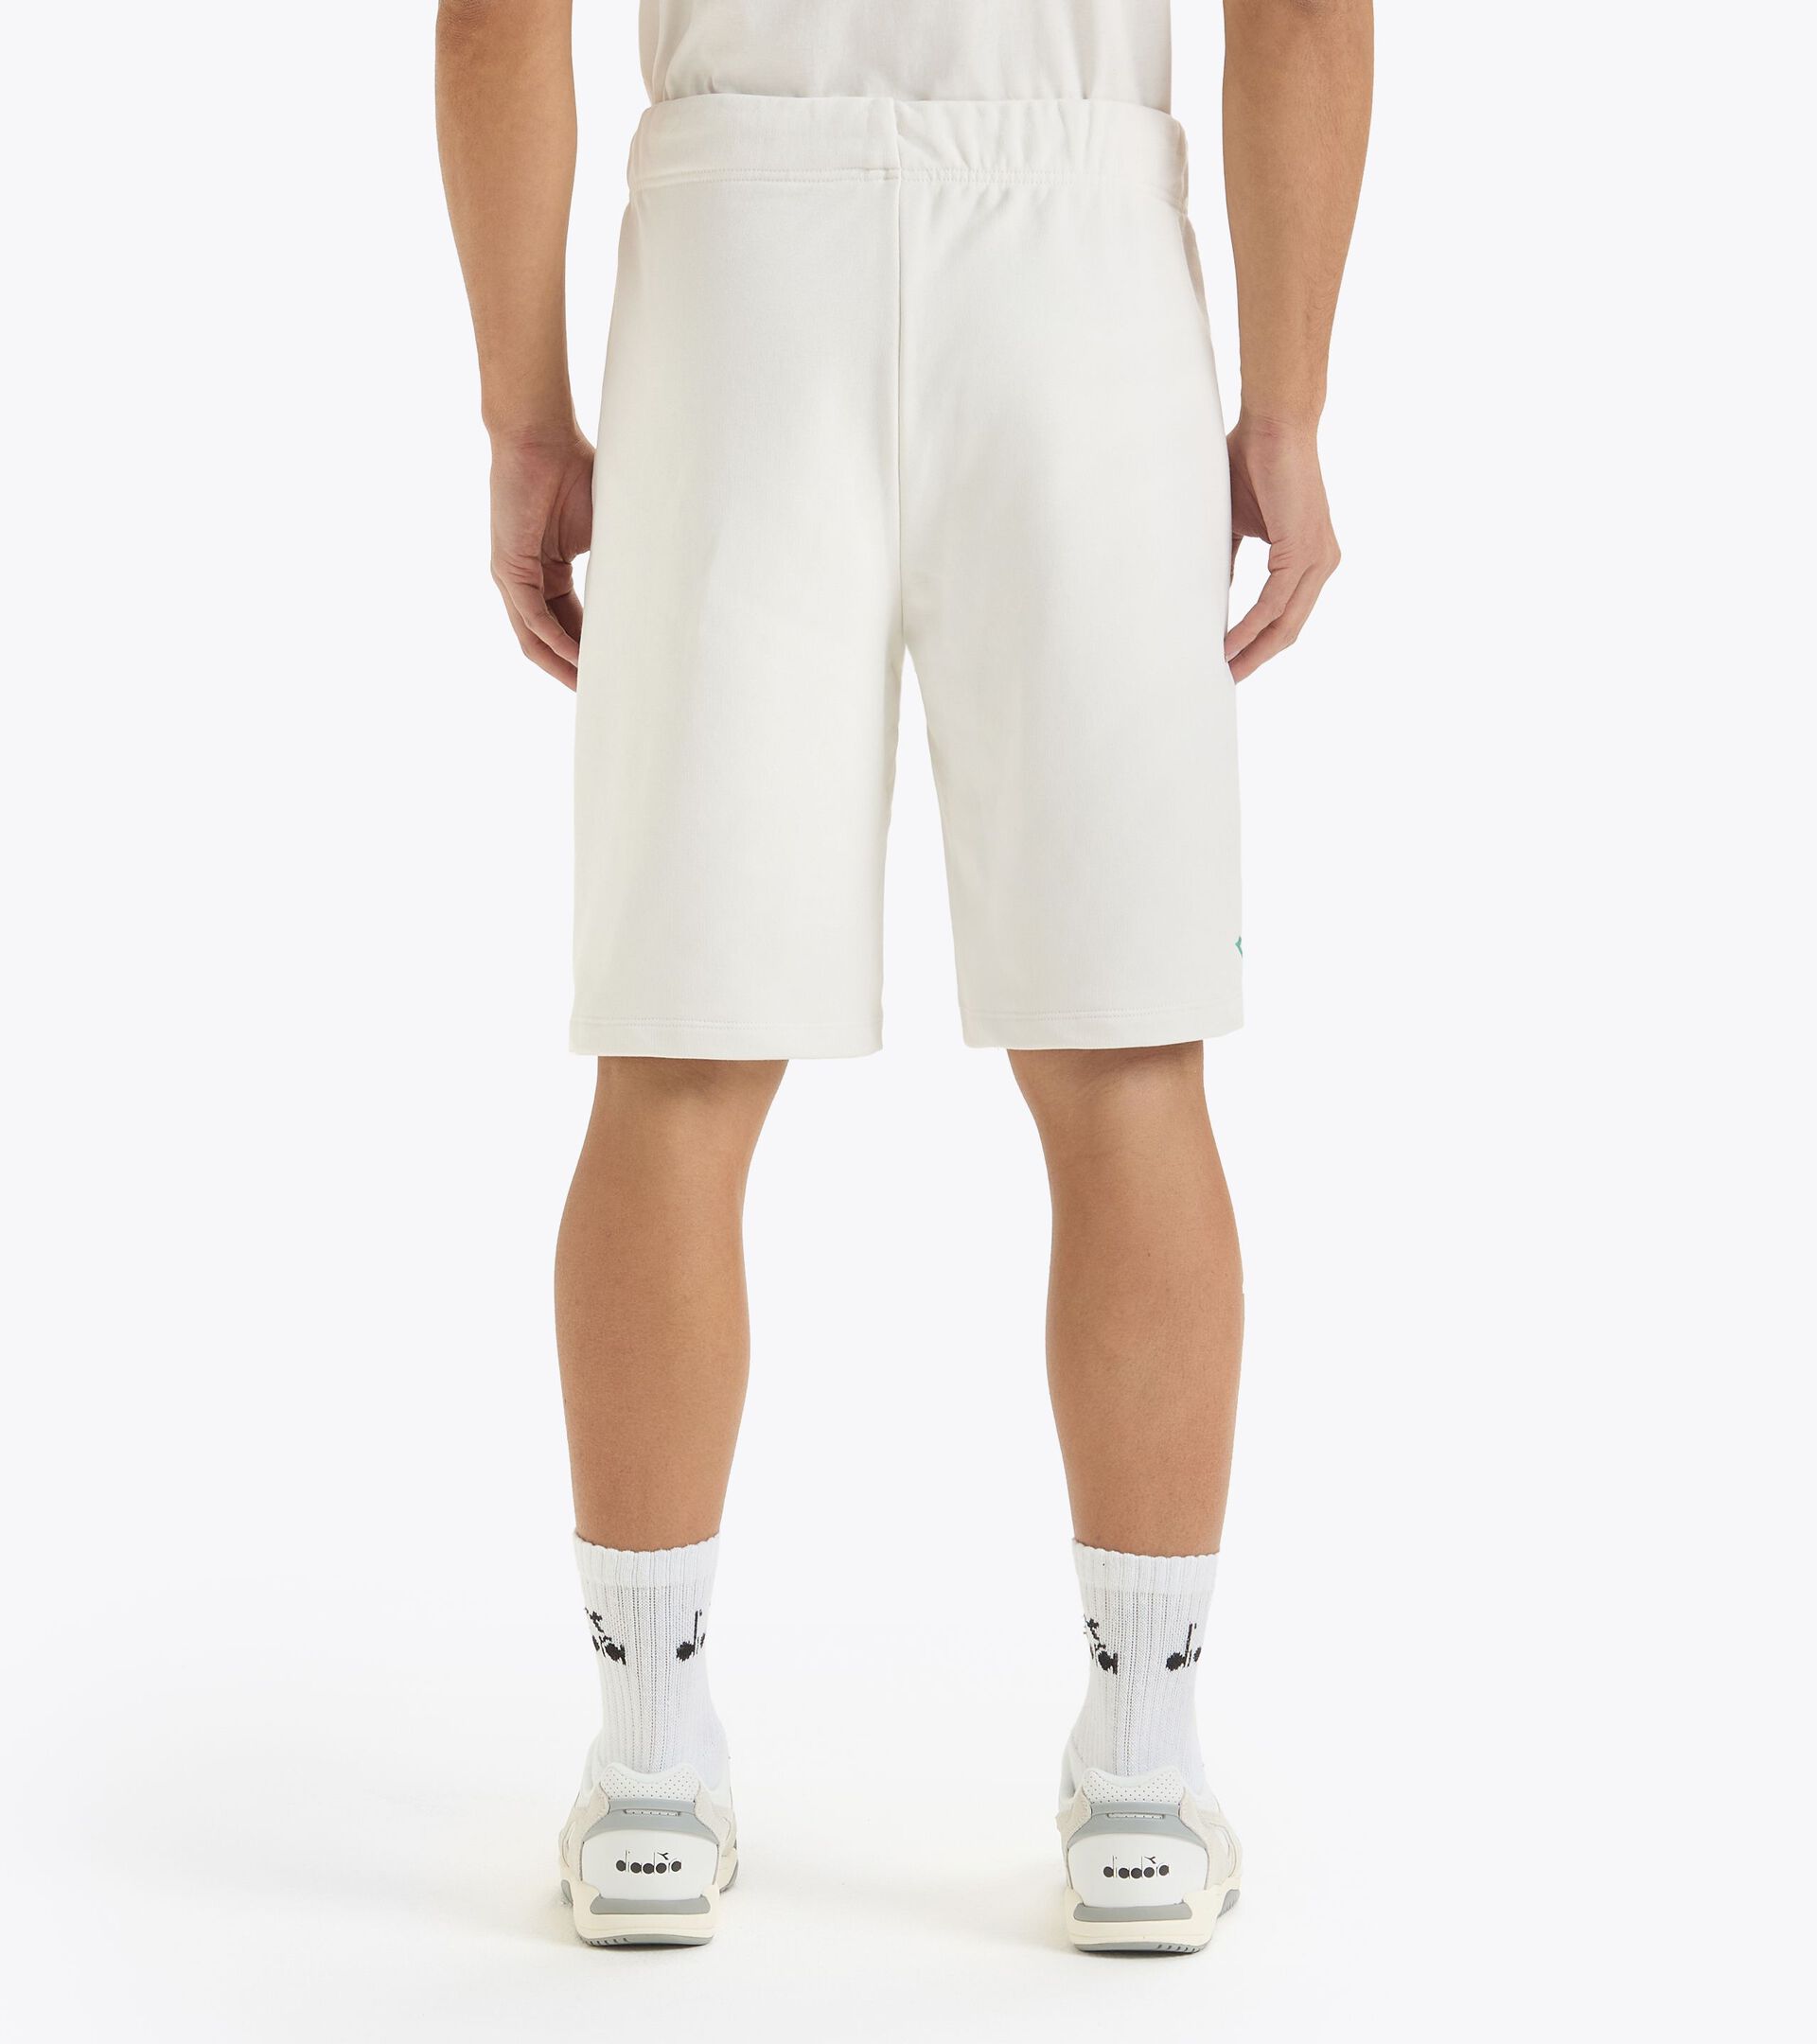 French terry cotton bermuda shorts - Gender Neutral BERMUDA ATHL. LOGO WHITE MILK - Diadora